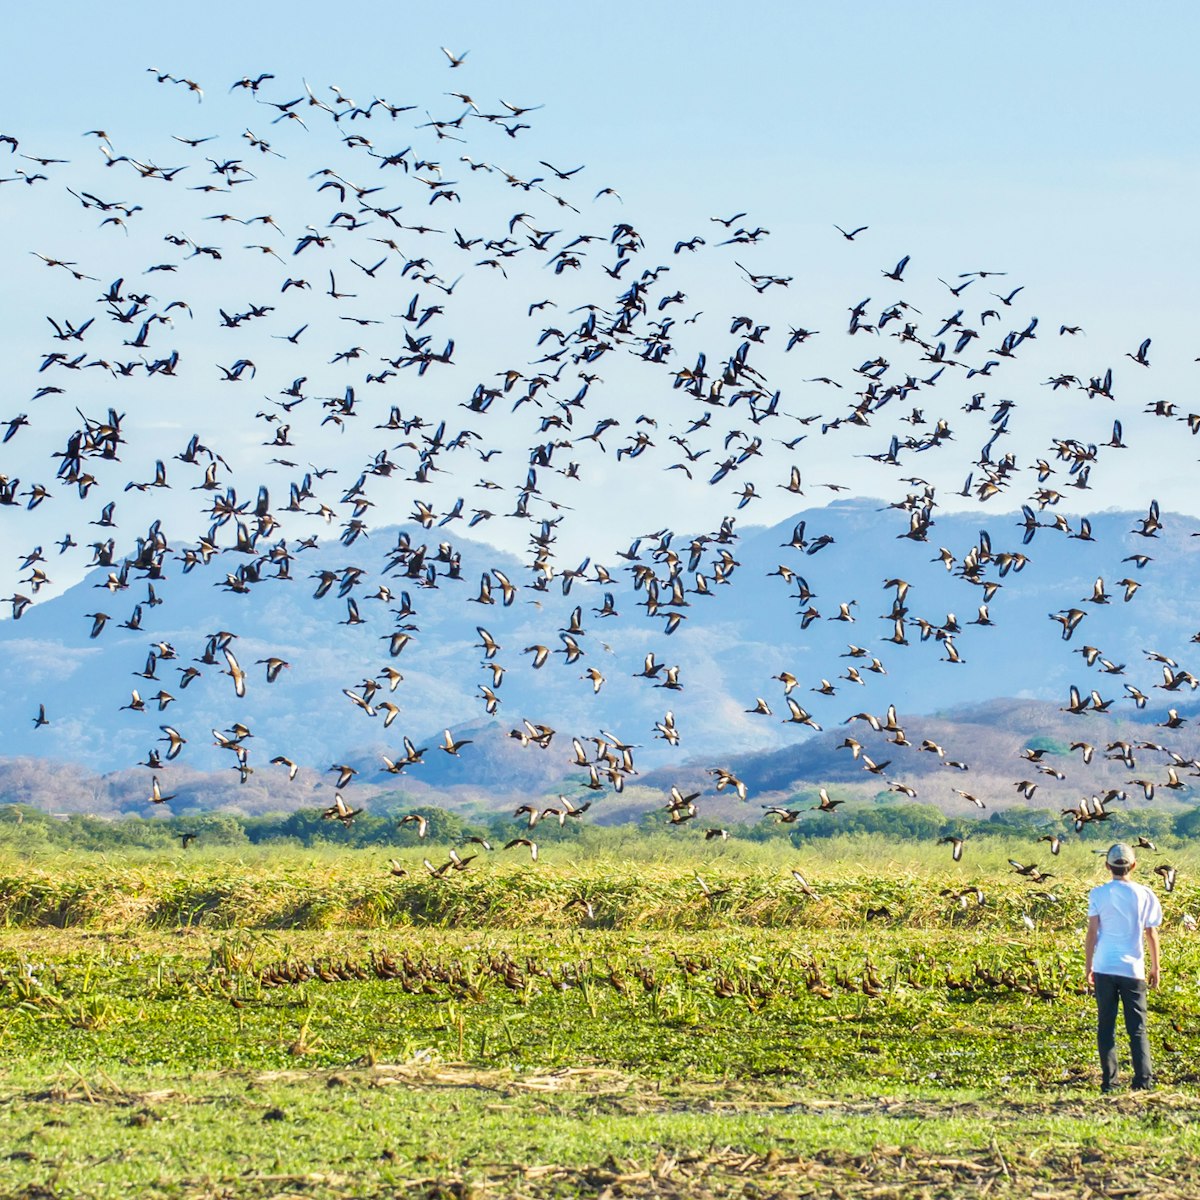 Black-bellied whistling ducks at Palo Verde National Park.